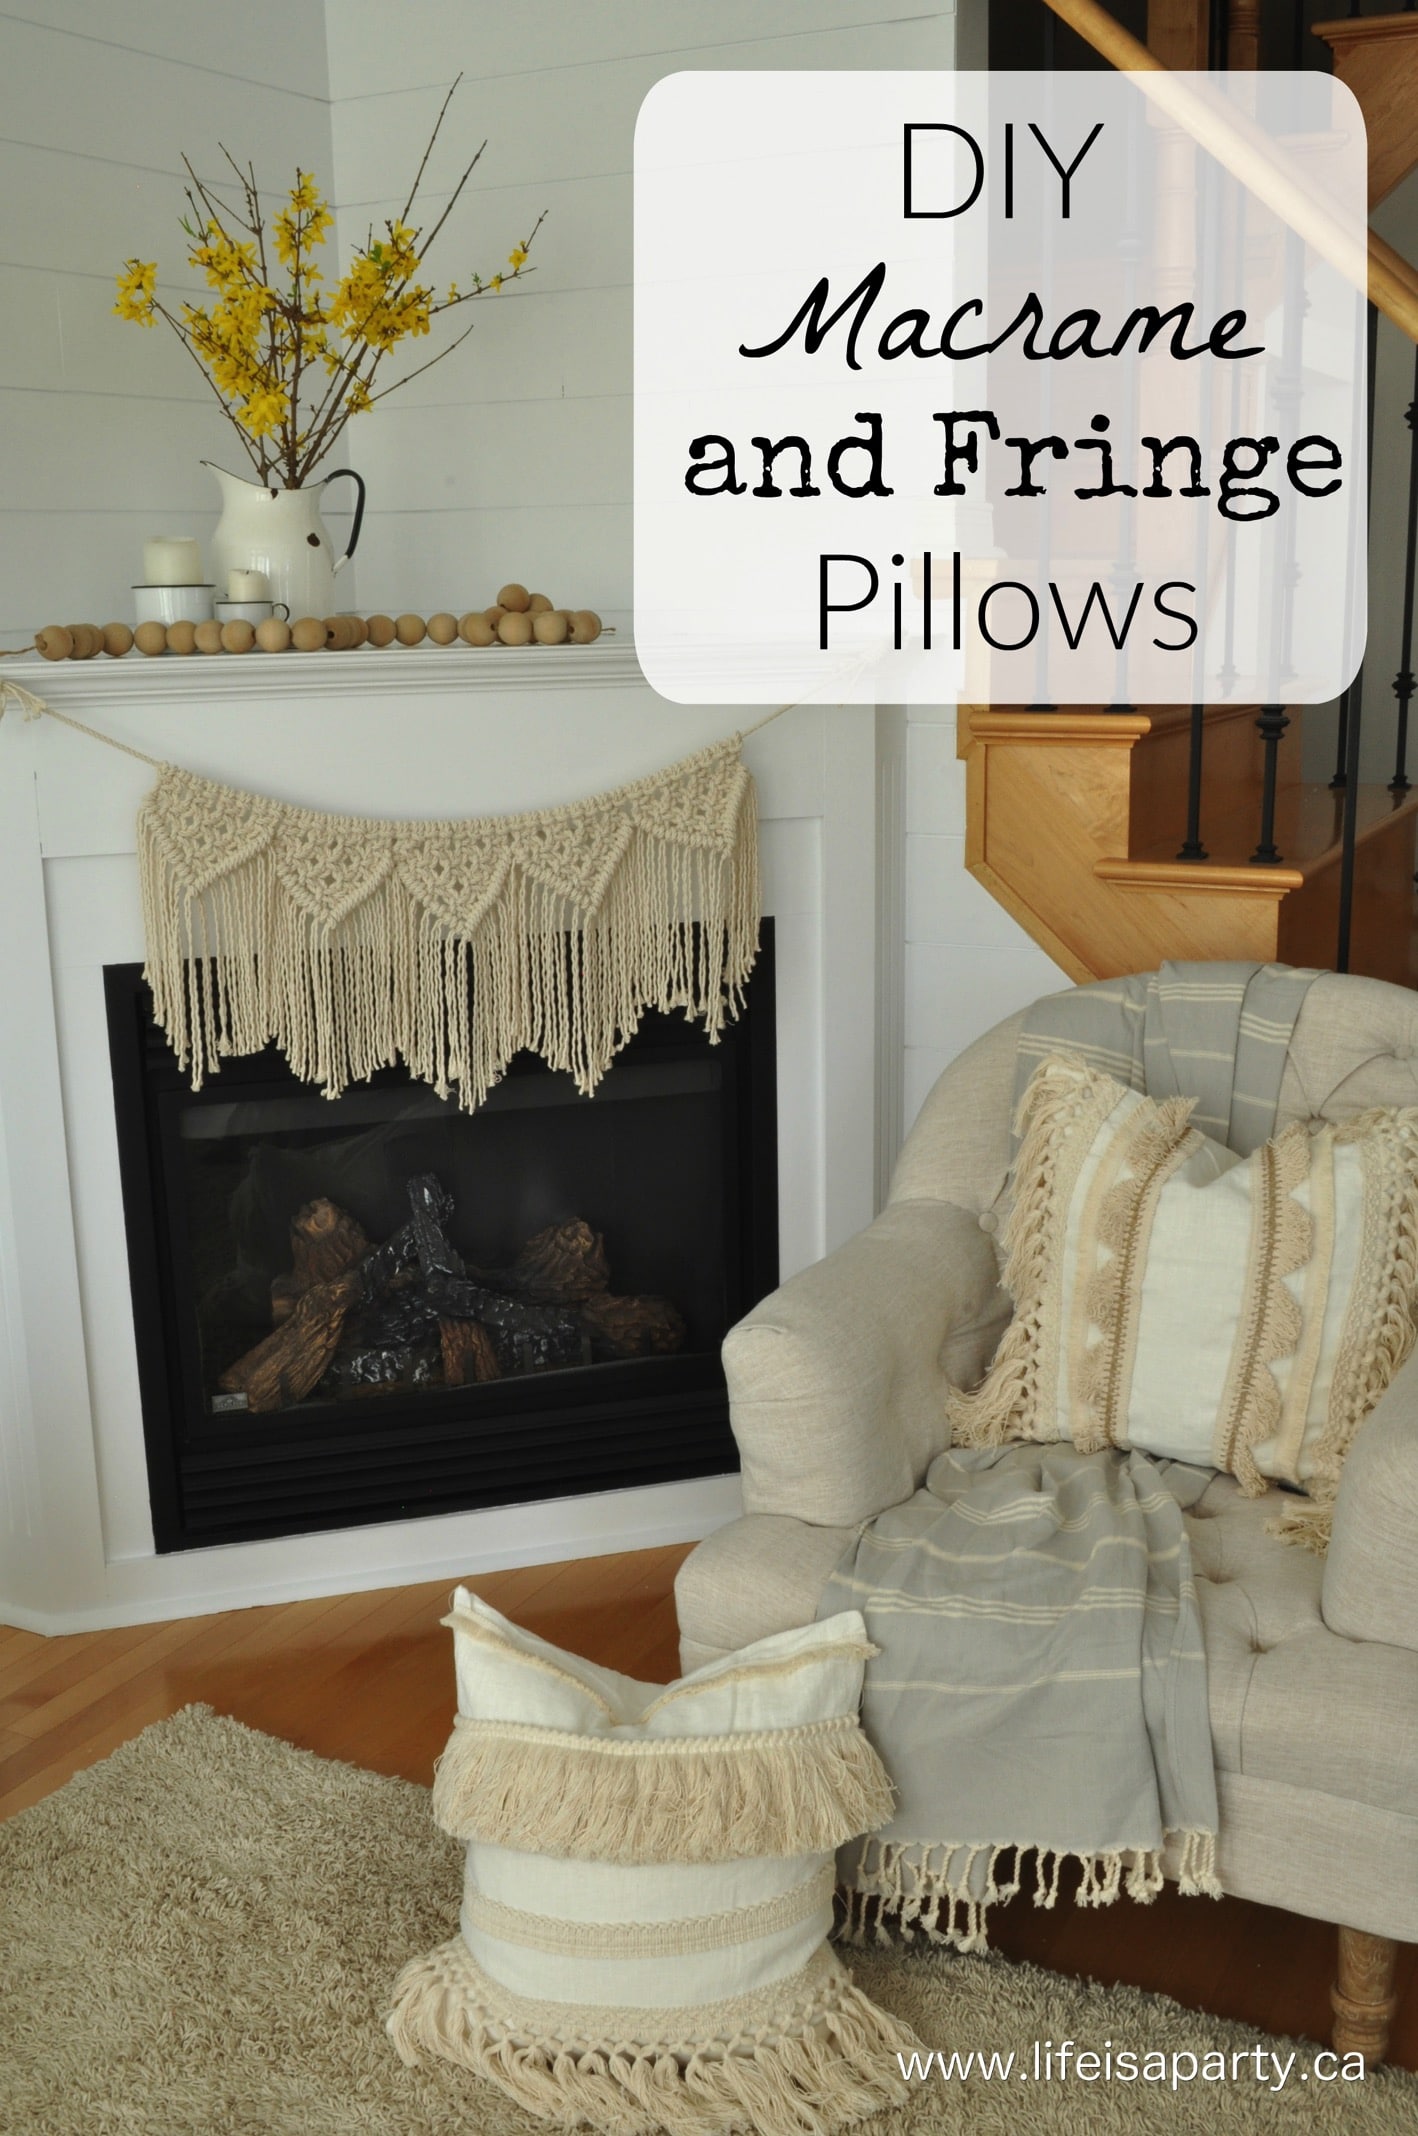 DIY Macrame and Fringe Pillows: Week 5 One Room Challenge